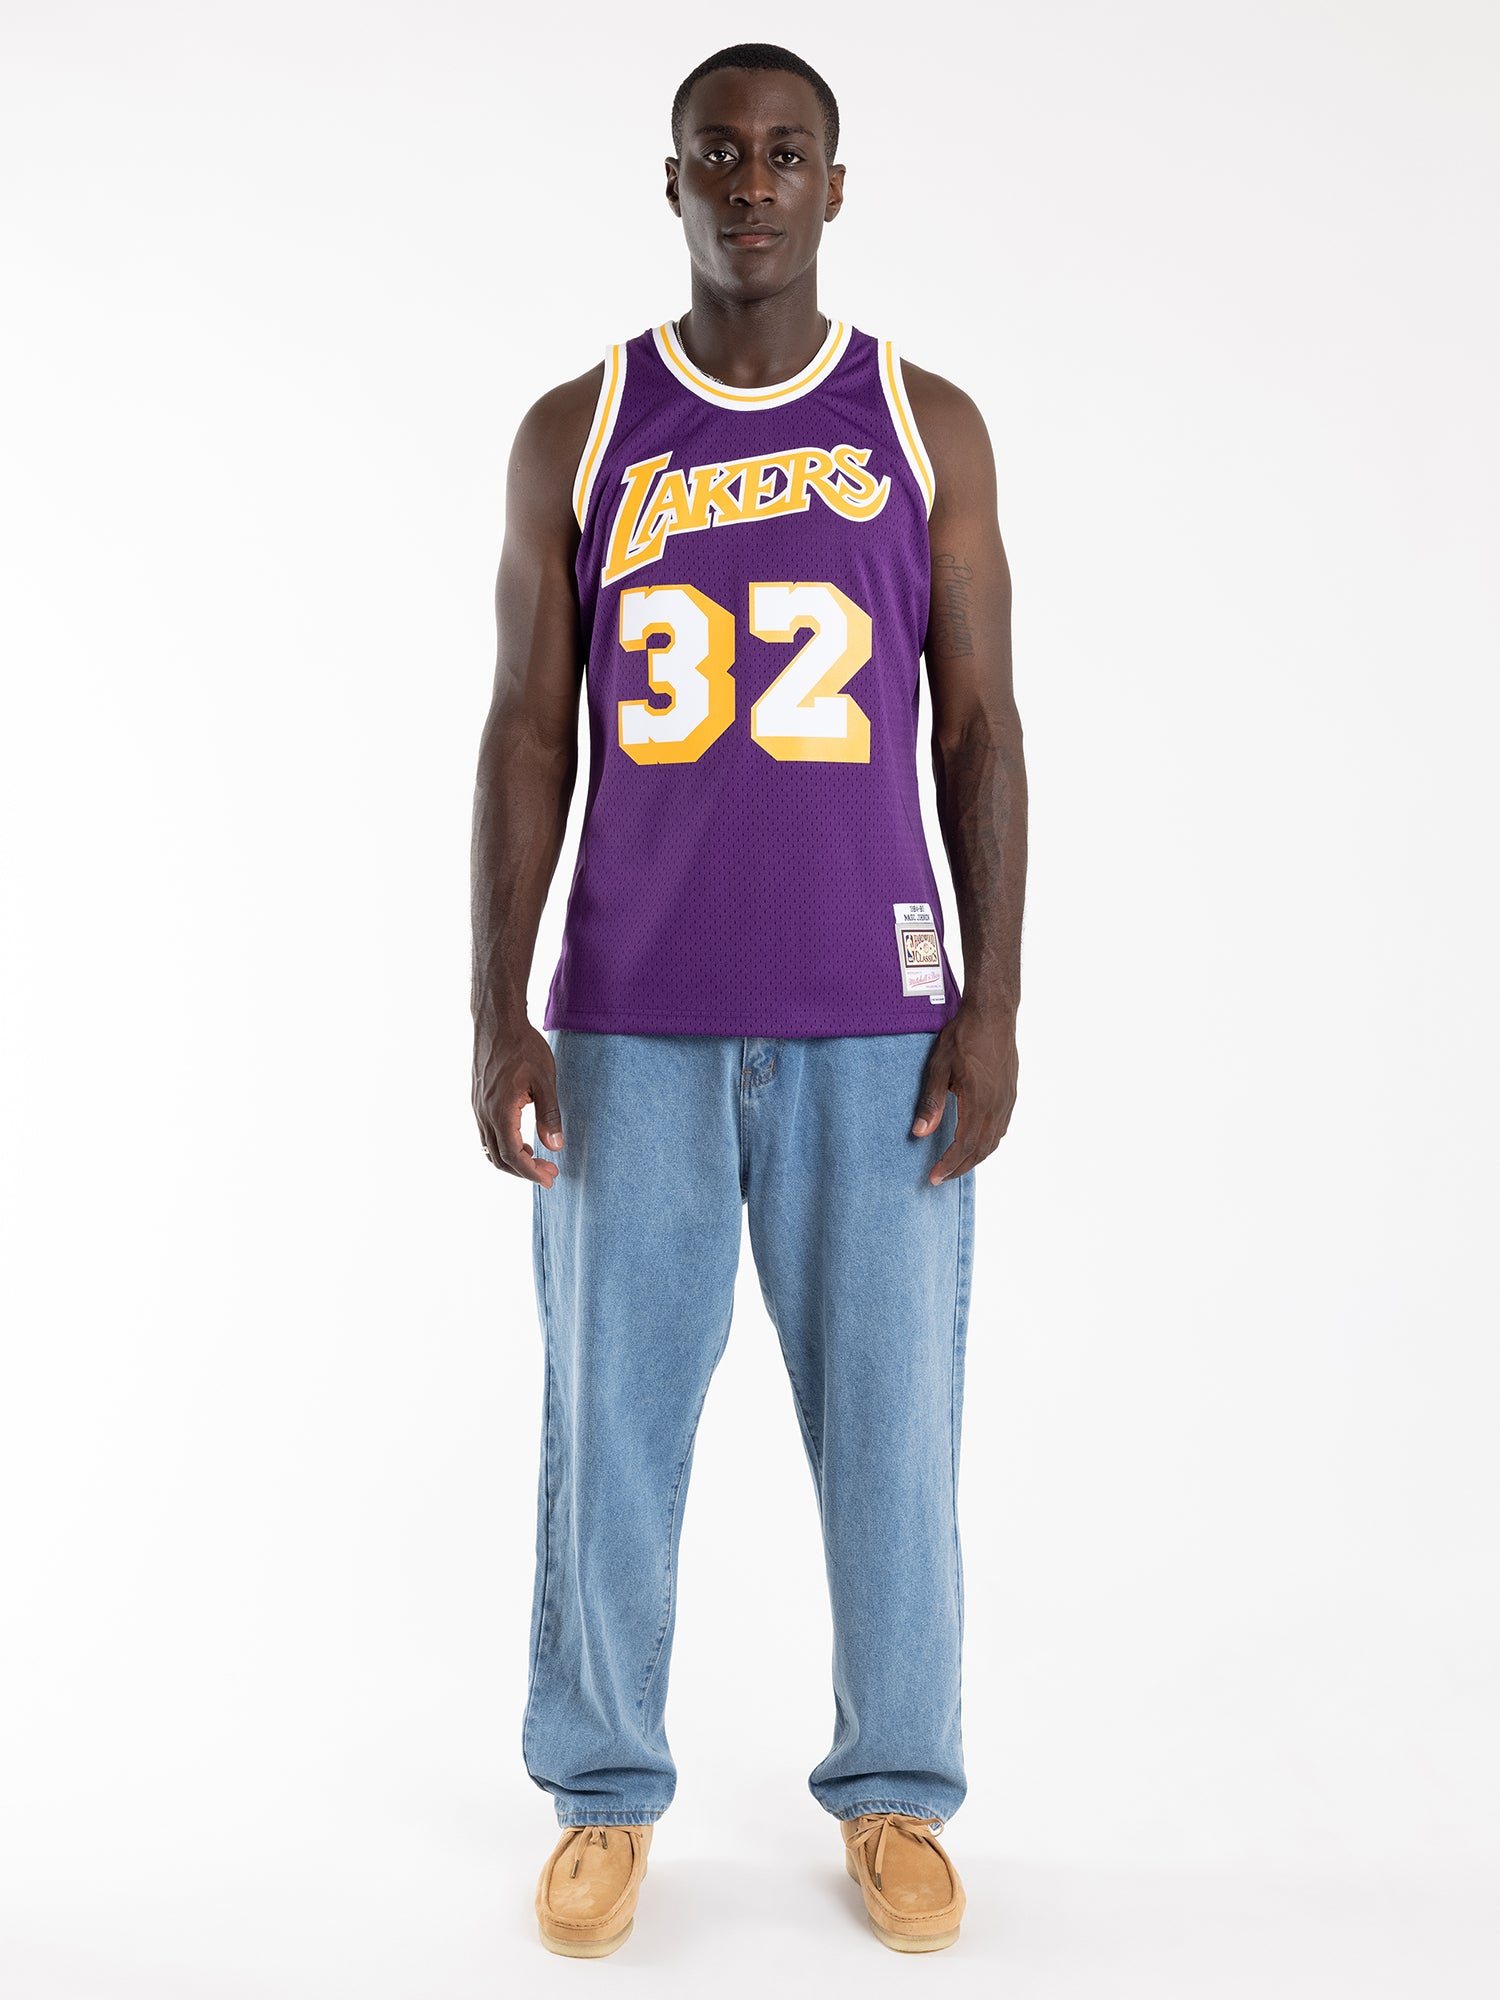  Mitchell & Ness Los Angeles Lakers Magic Johnson 32 Yellow  Replica Swingman Jersey 2.0 NBA HWC Basketball Trikot : Sports & Outdoors